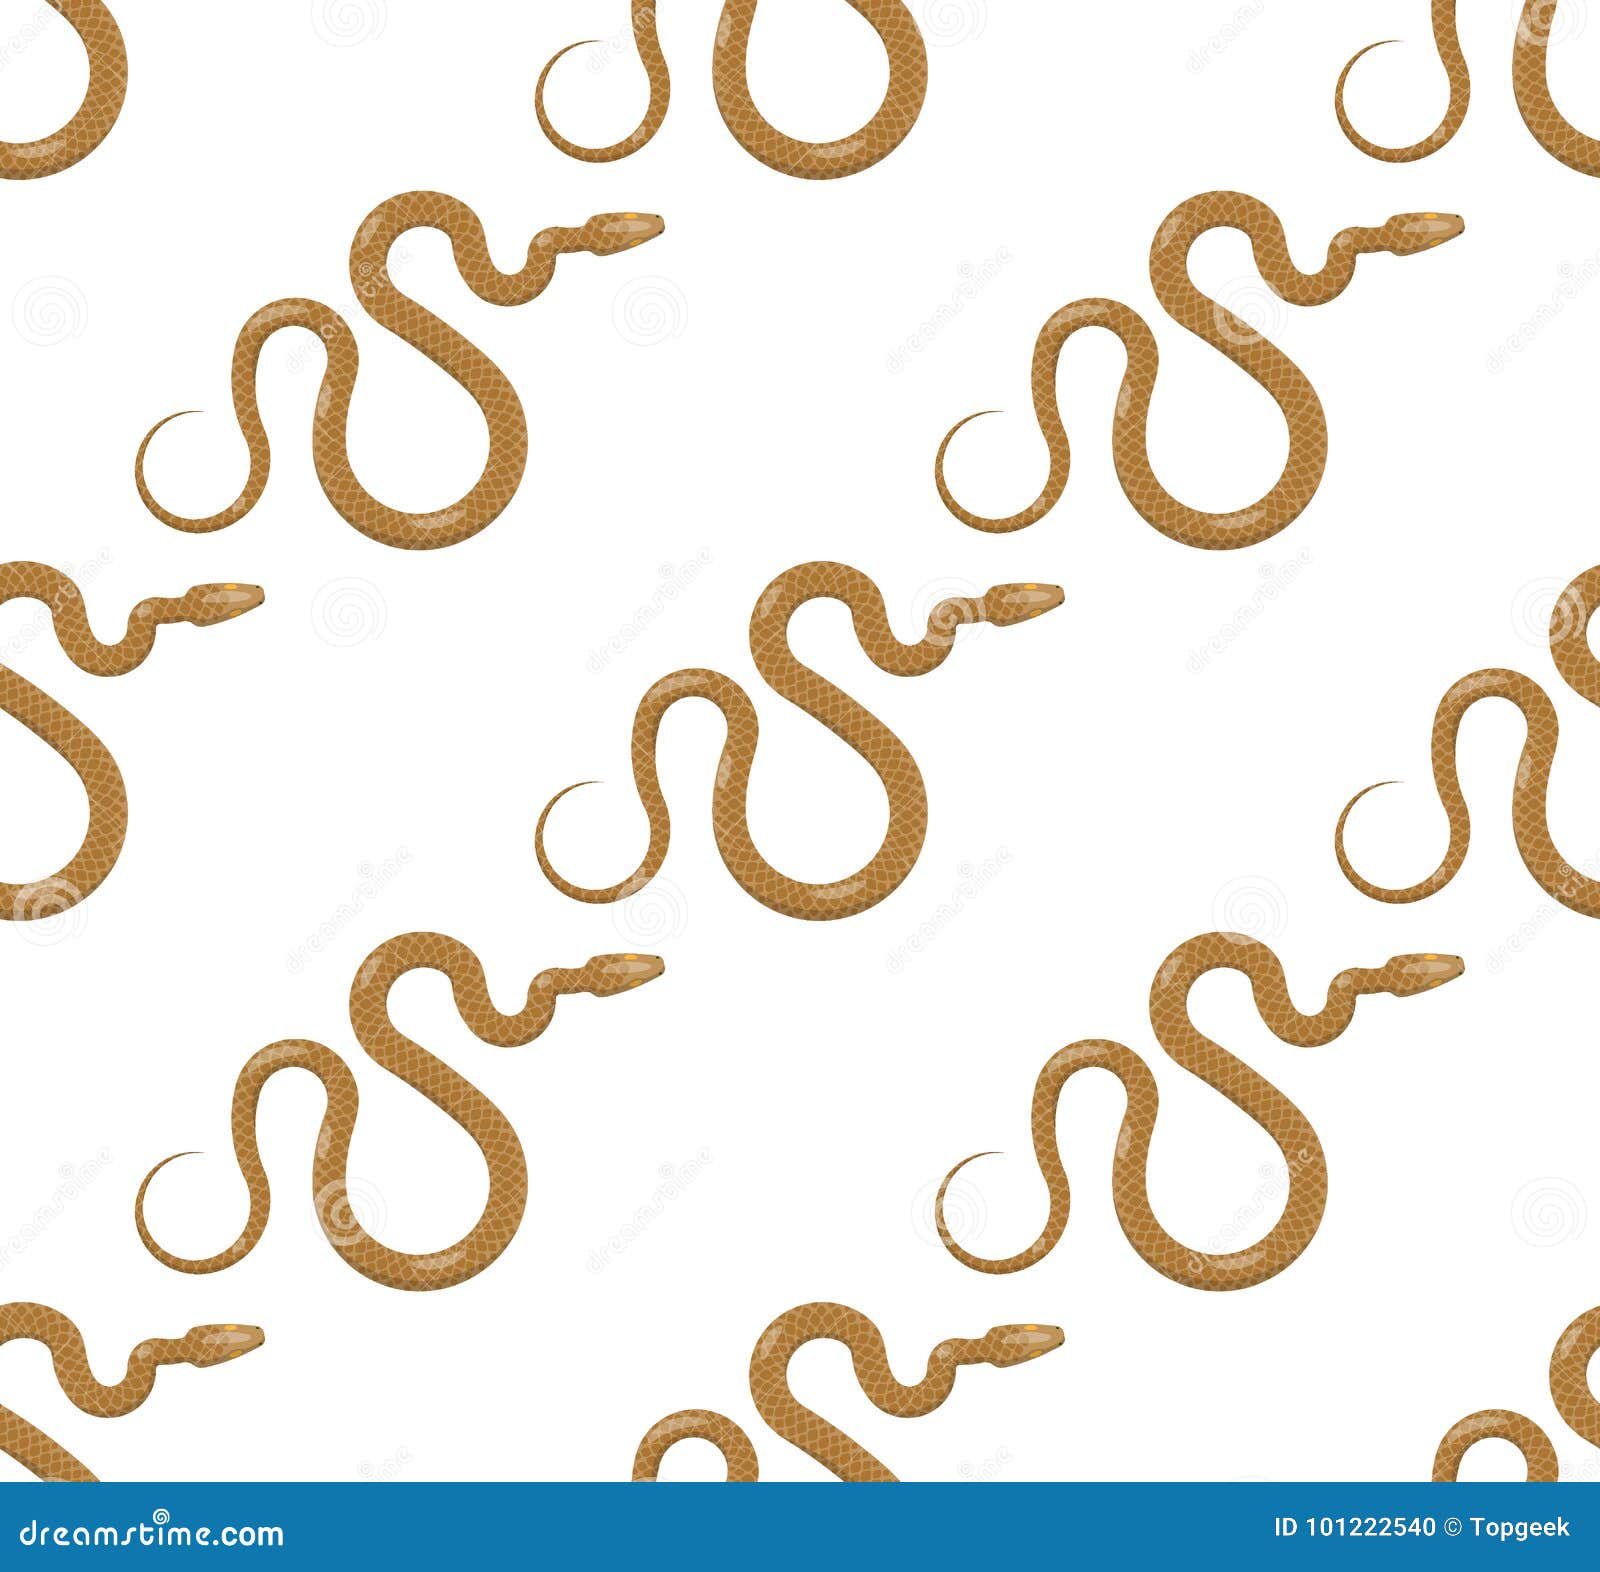 curved slither snake seamless pattern 